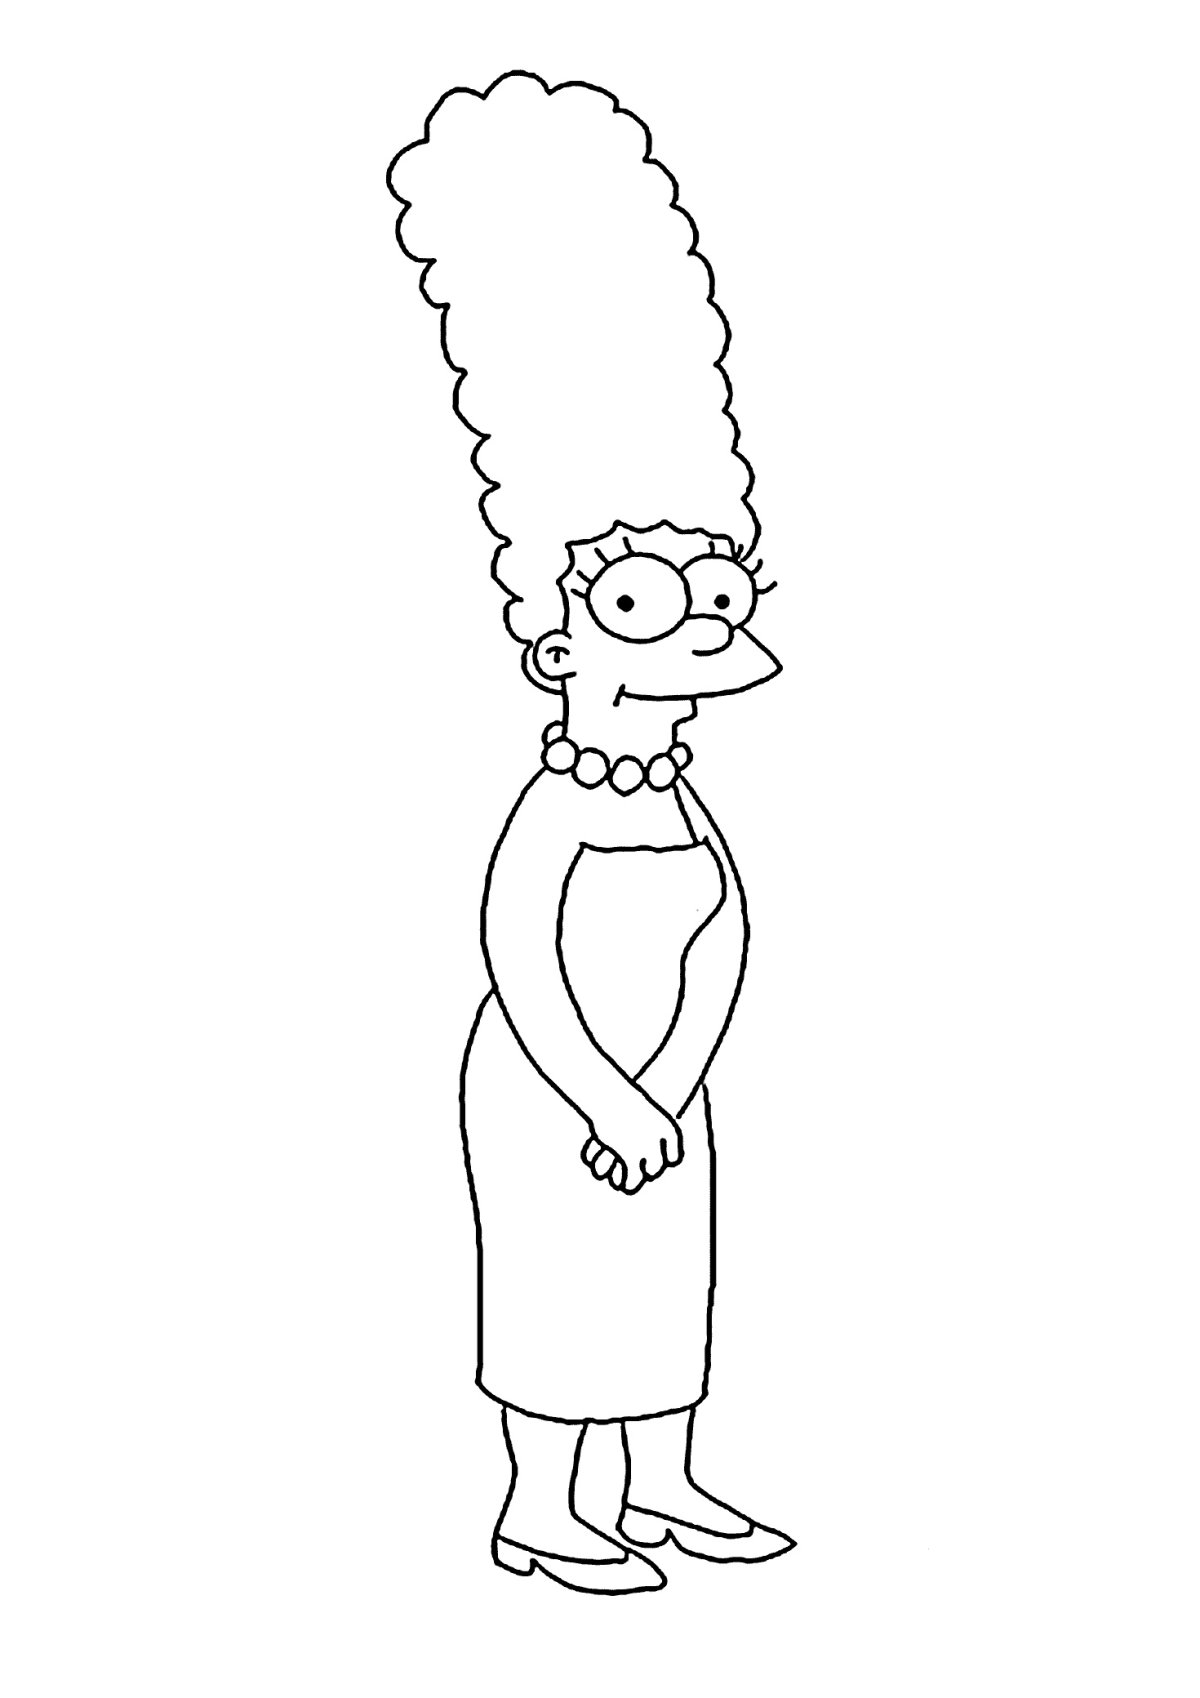 Мардж симпсон рисунок